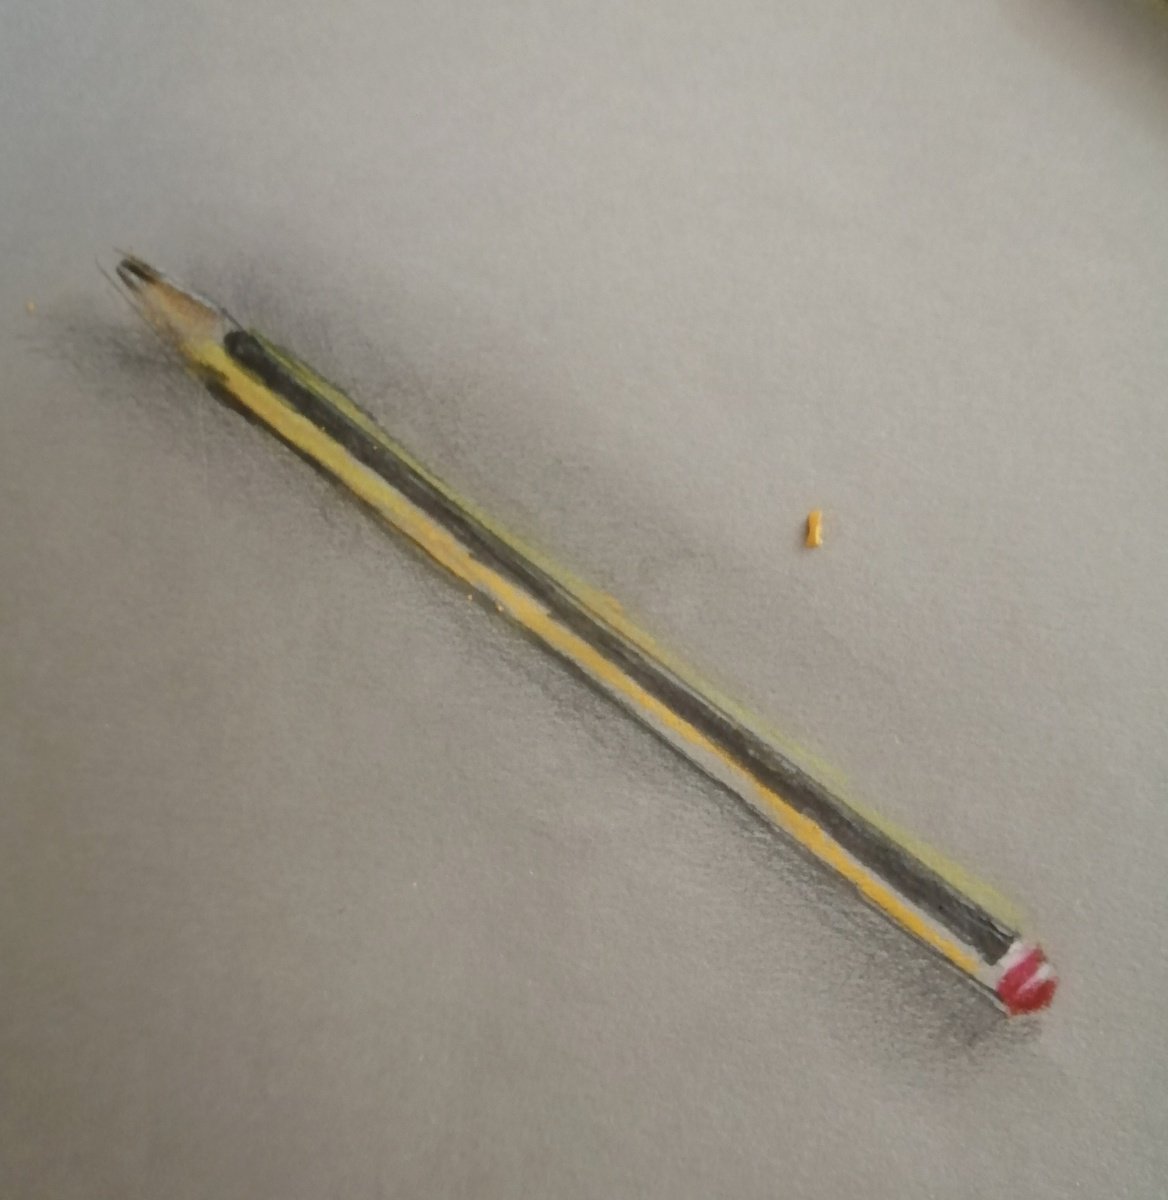 Pencil by Rosemary Burn